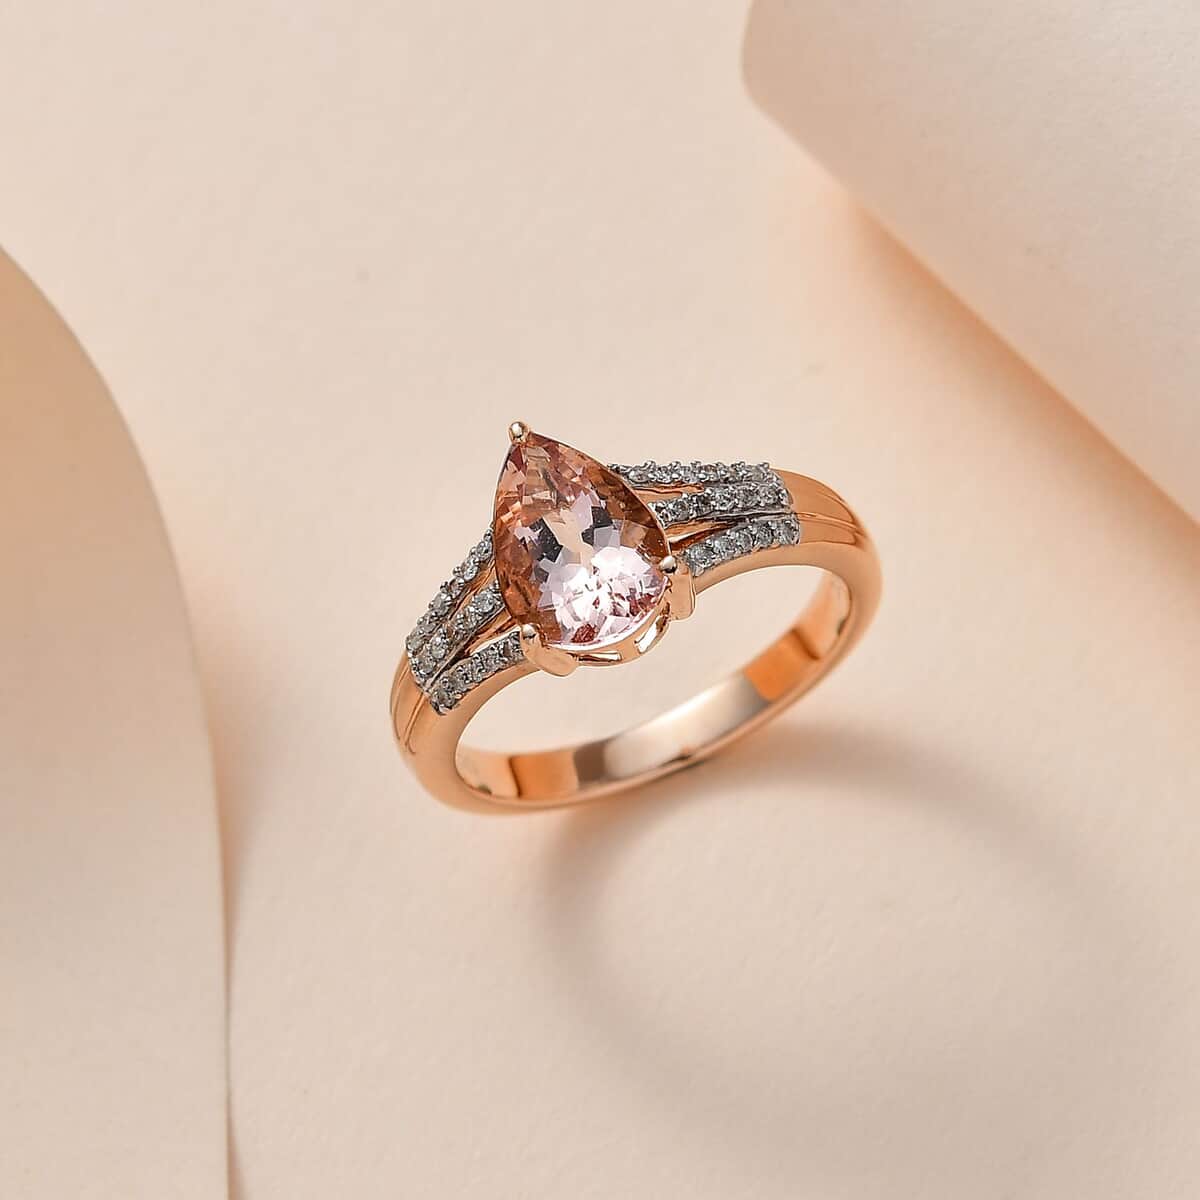 Luxoro 10K Rose Gold Premium Pink Morganite and Diamond Ring (Size 7.0) 1.75 ctw image number 1